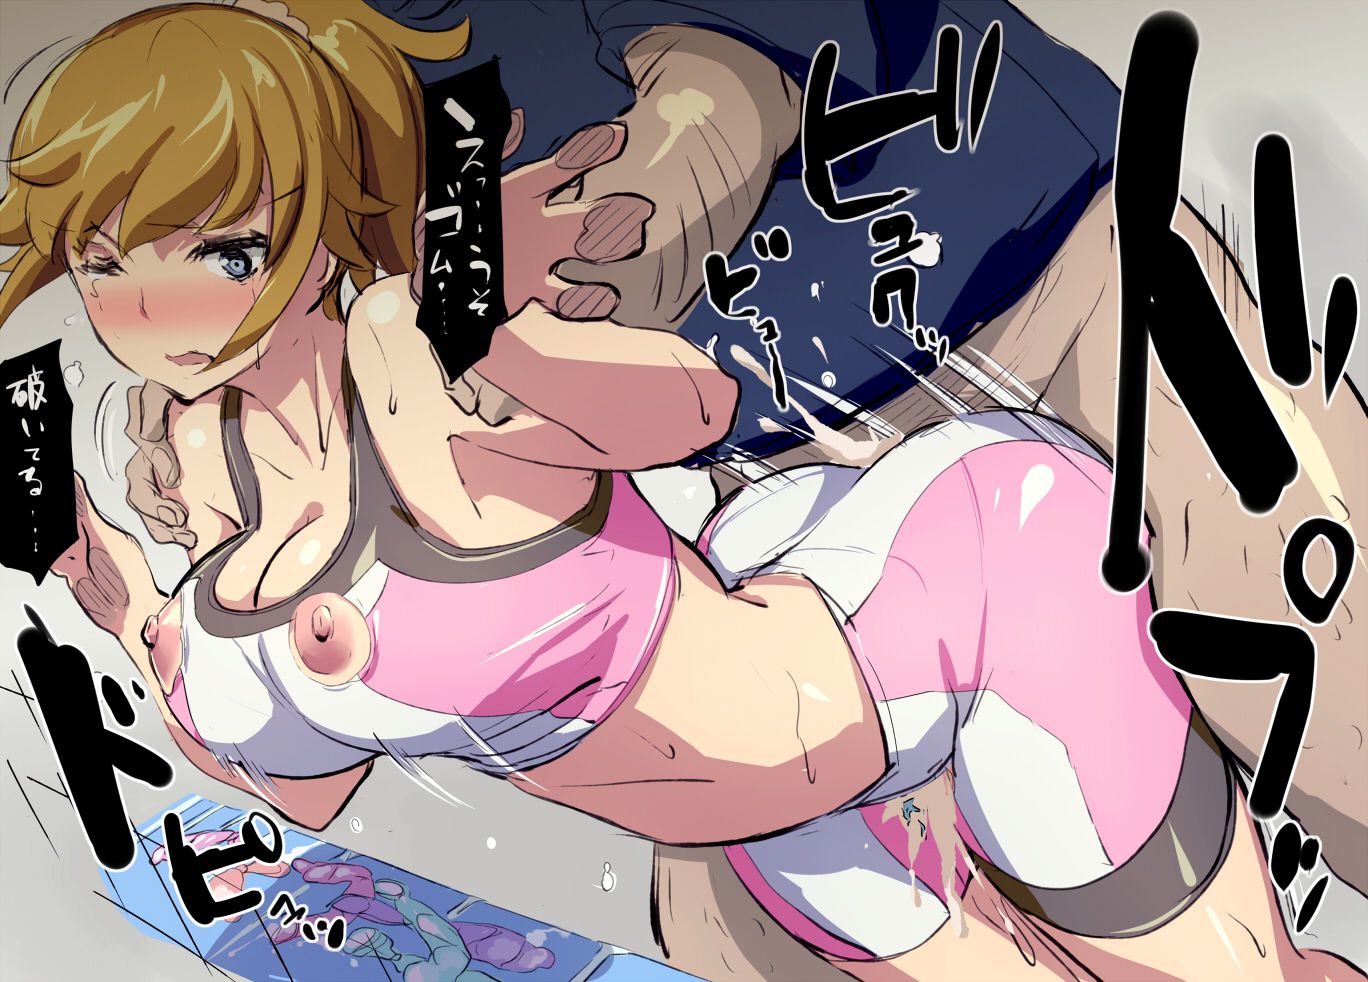 [Build fighters] Hoshino Femina erotic images part 5 4